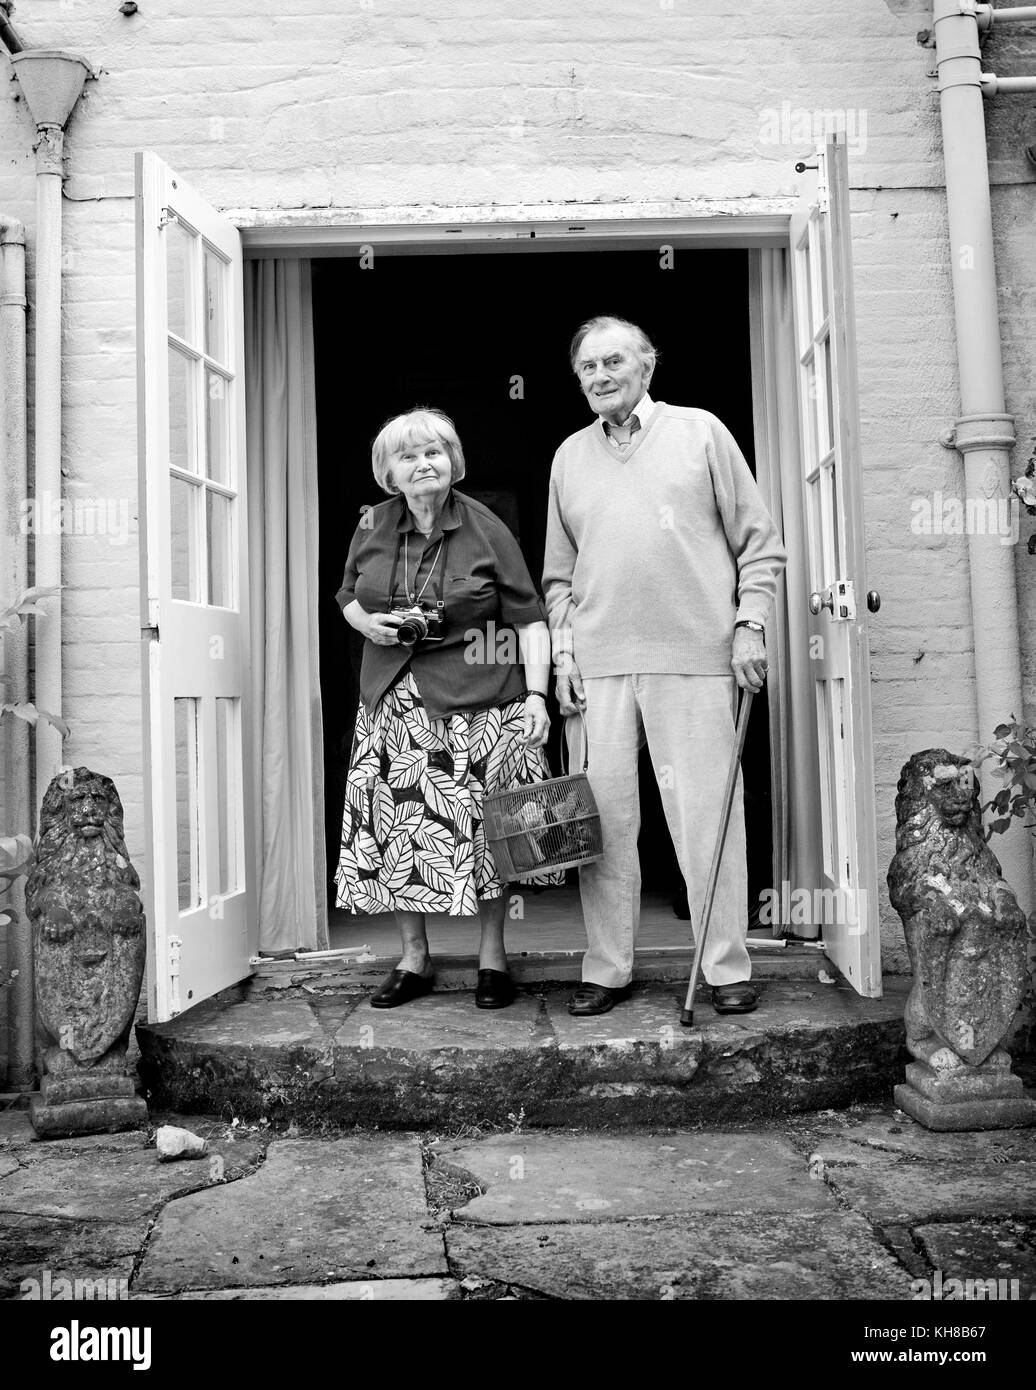 Photographer Jane Bown (13 March 1925 – 21 December 2014) and cartoonist/ illustrator Haro Hodson, B&W portrait in doorway Stock Photo